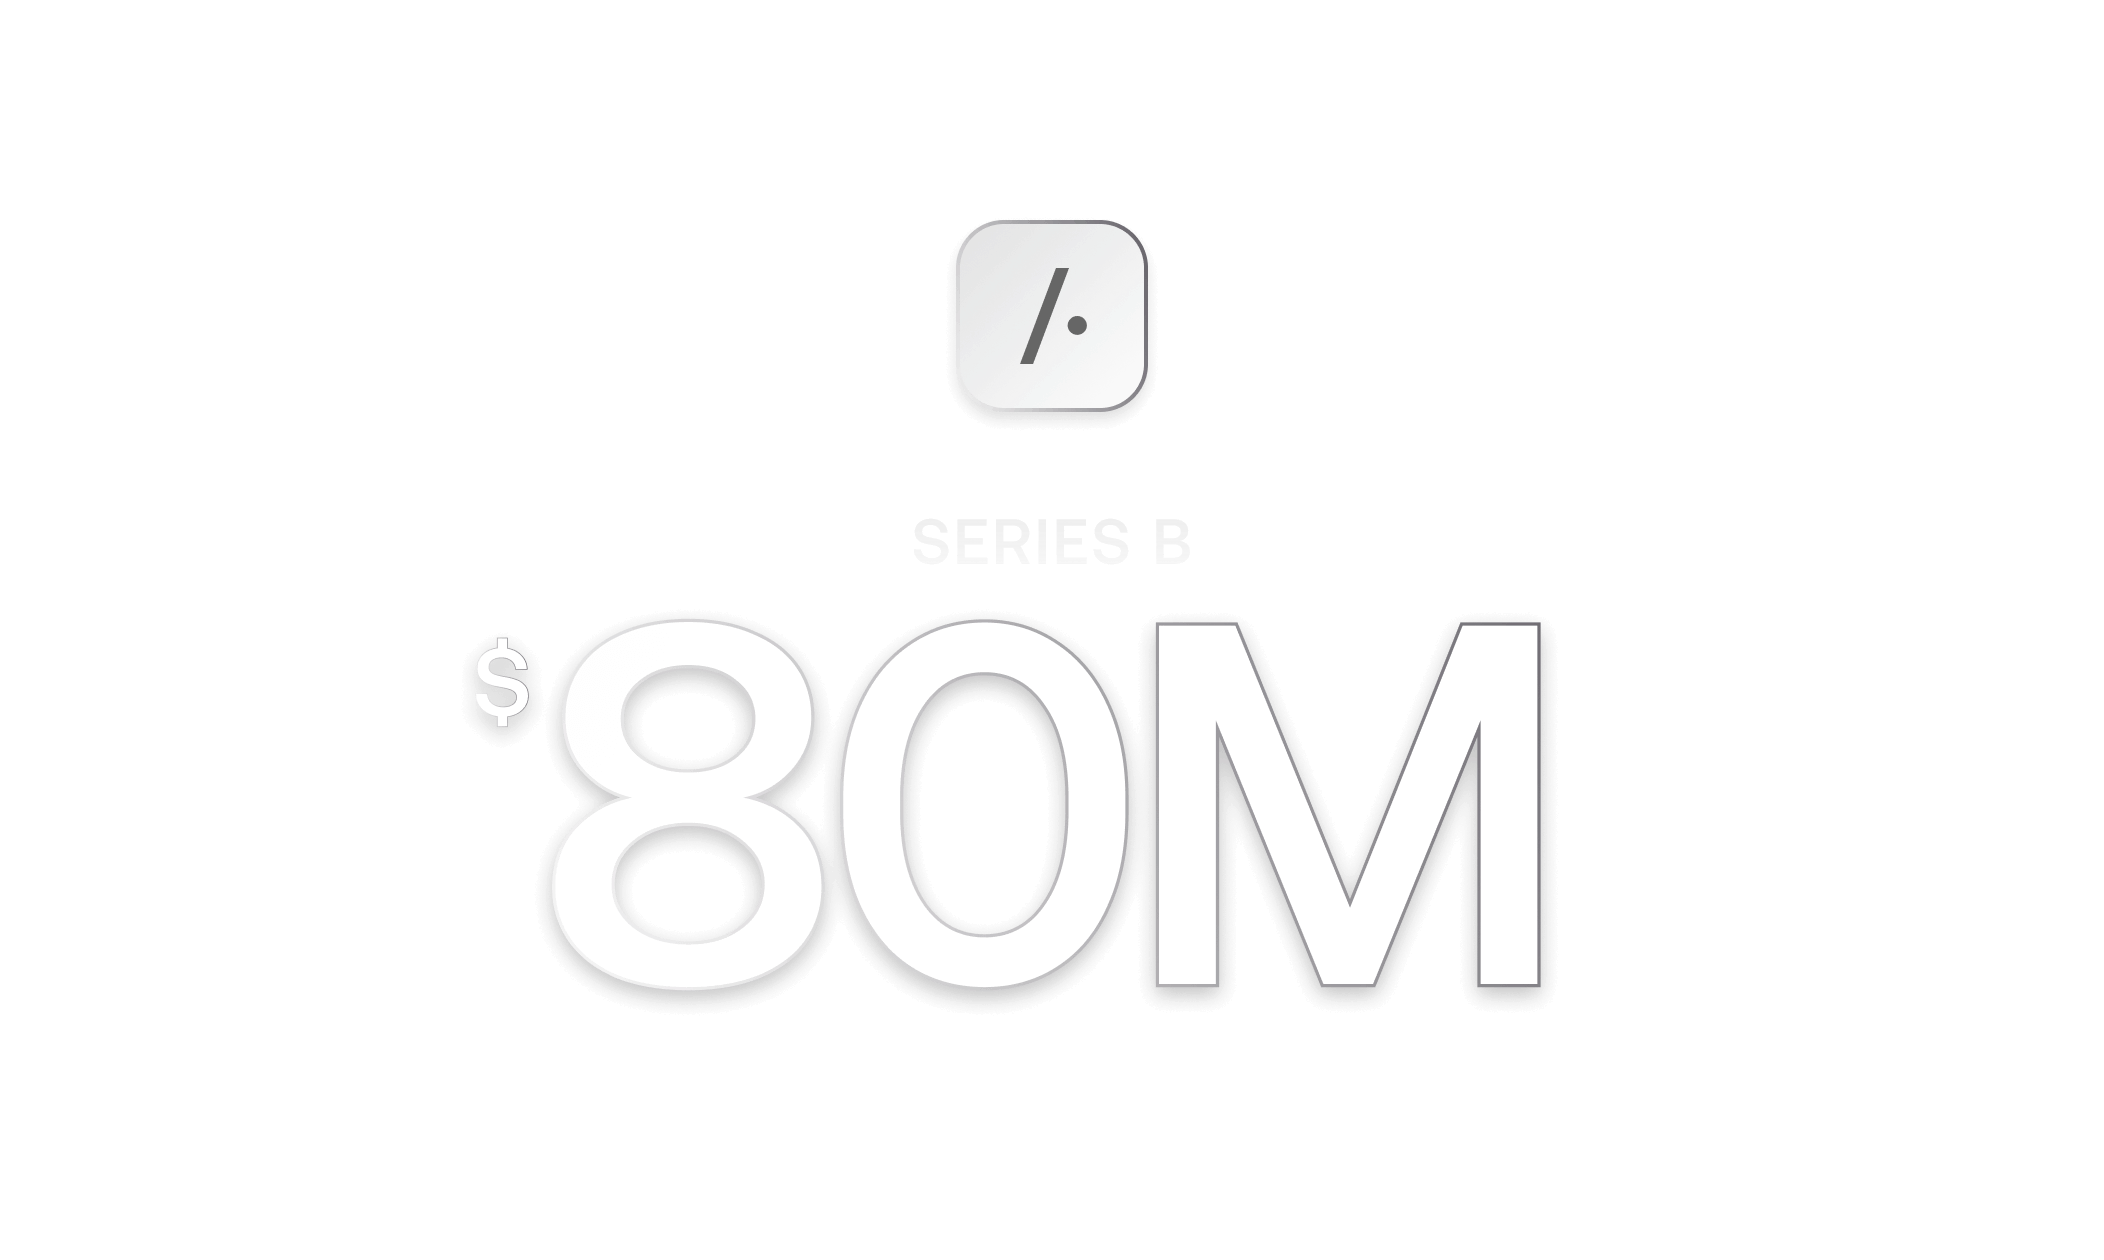 Series B 80 million